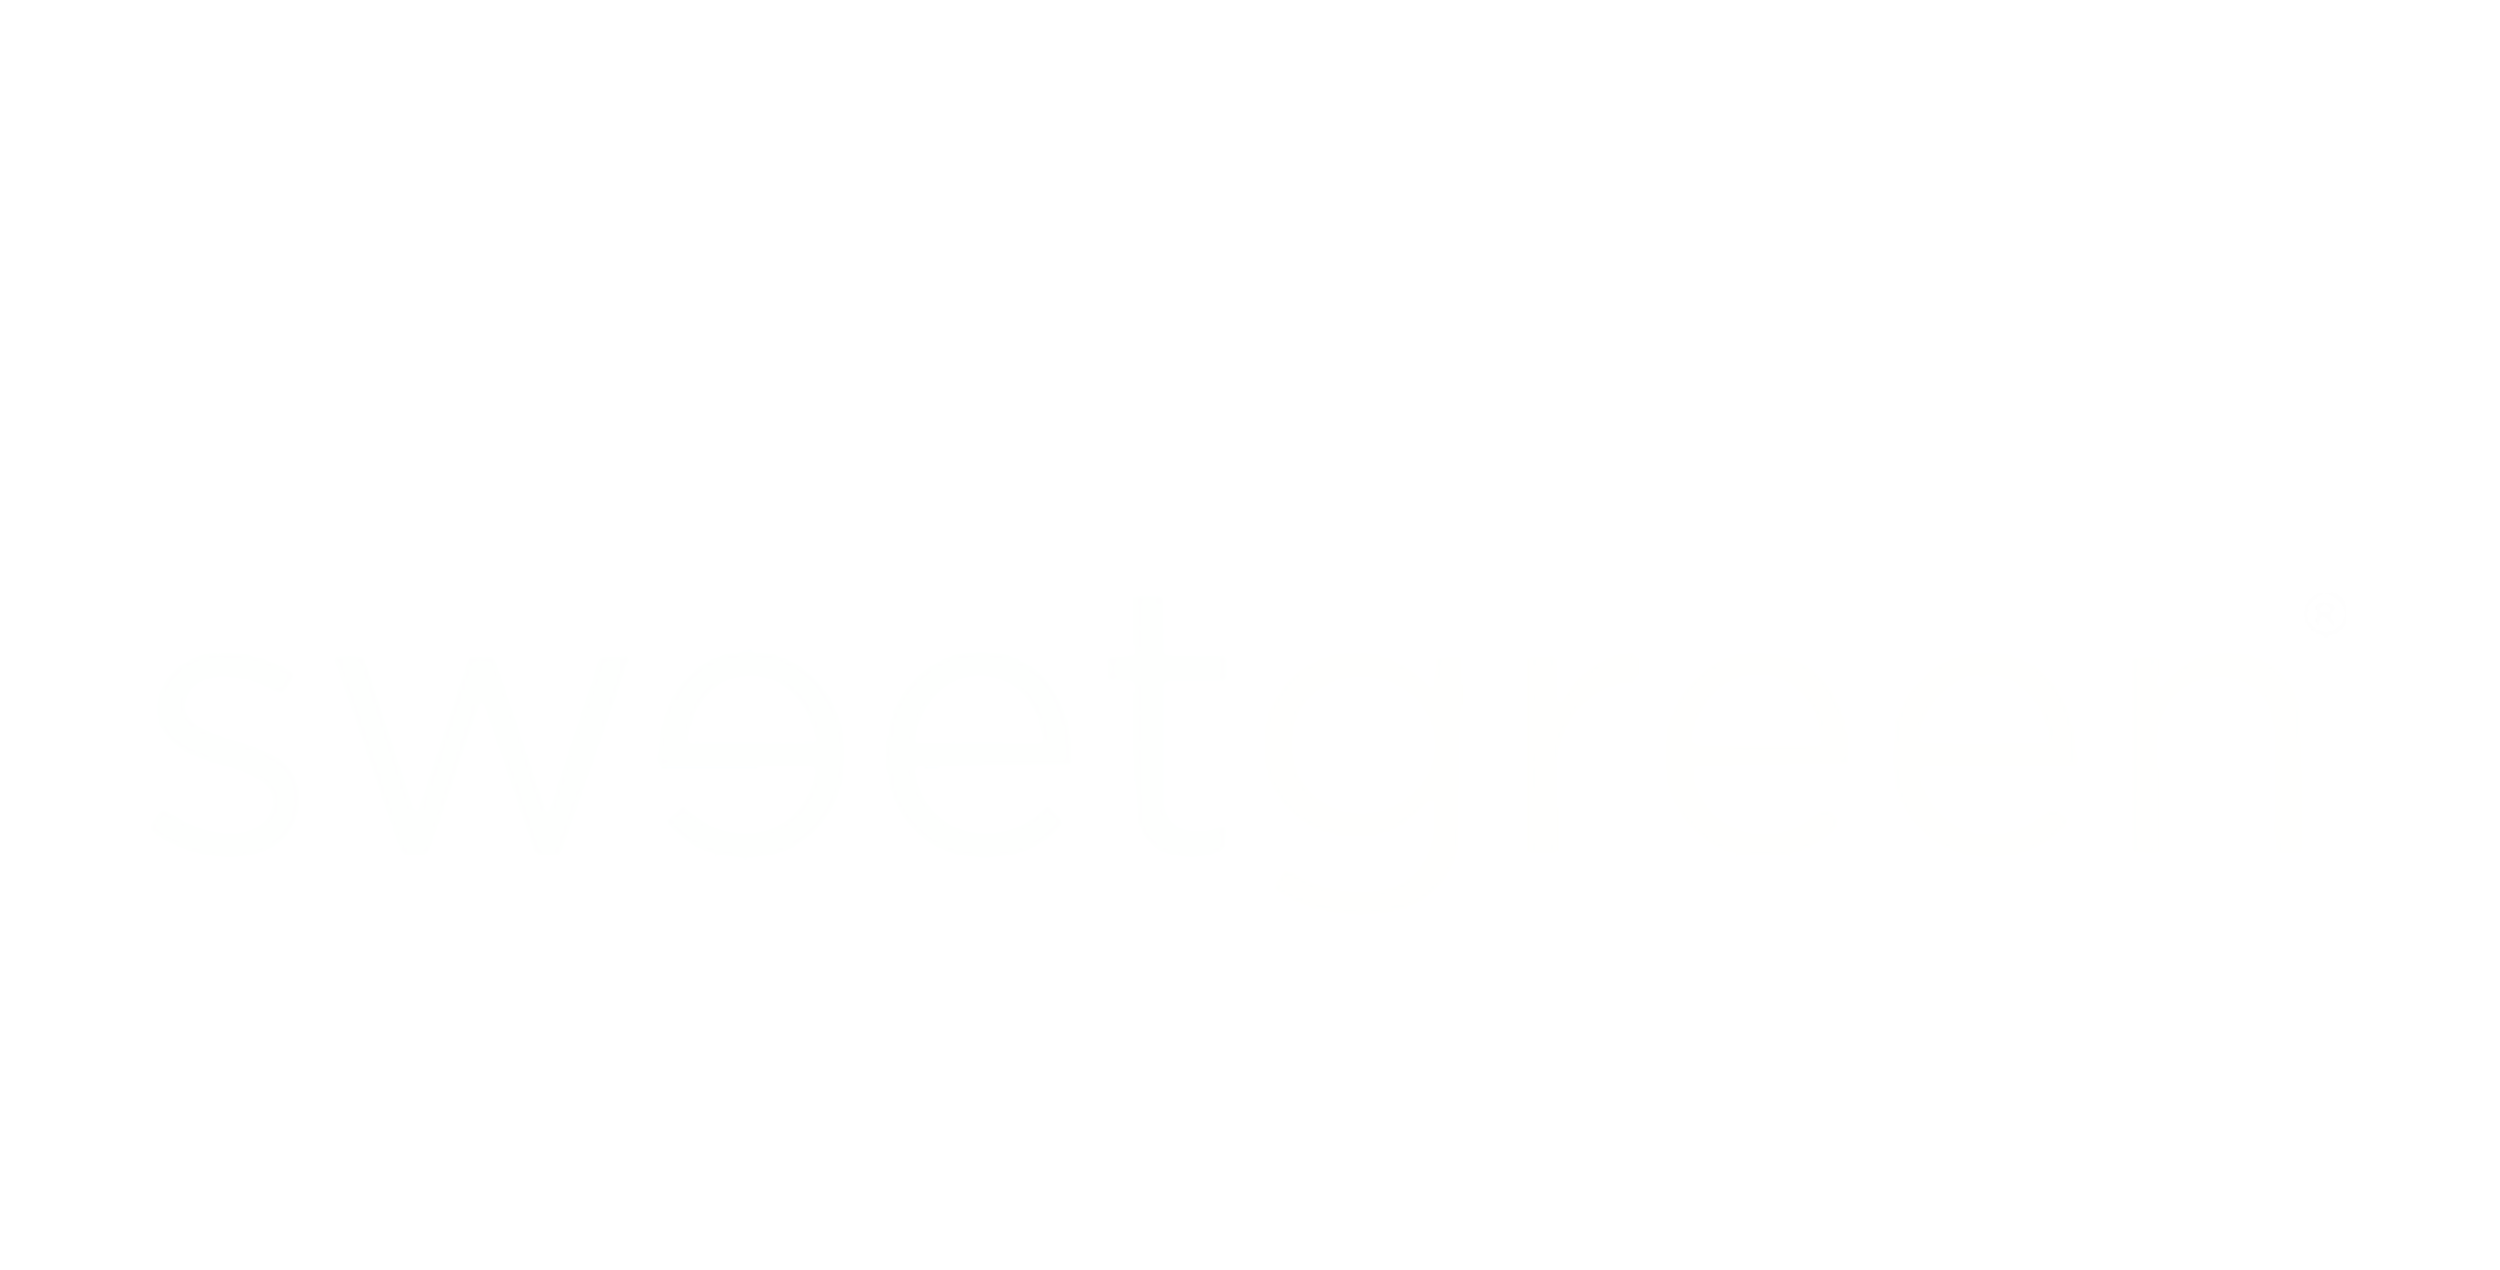 Sweetgreen logo in white